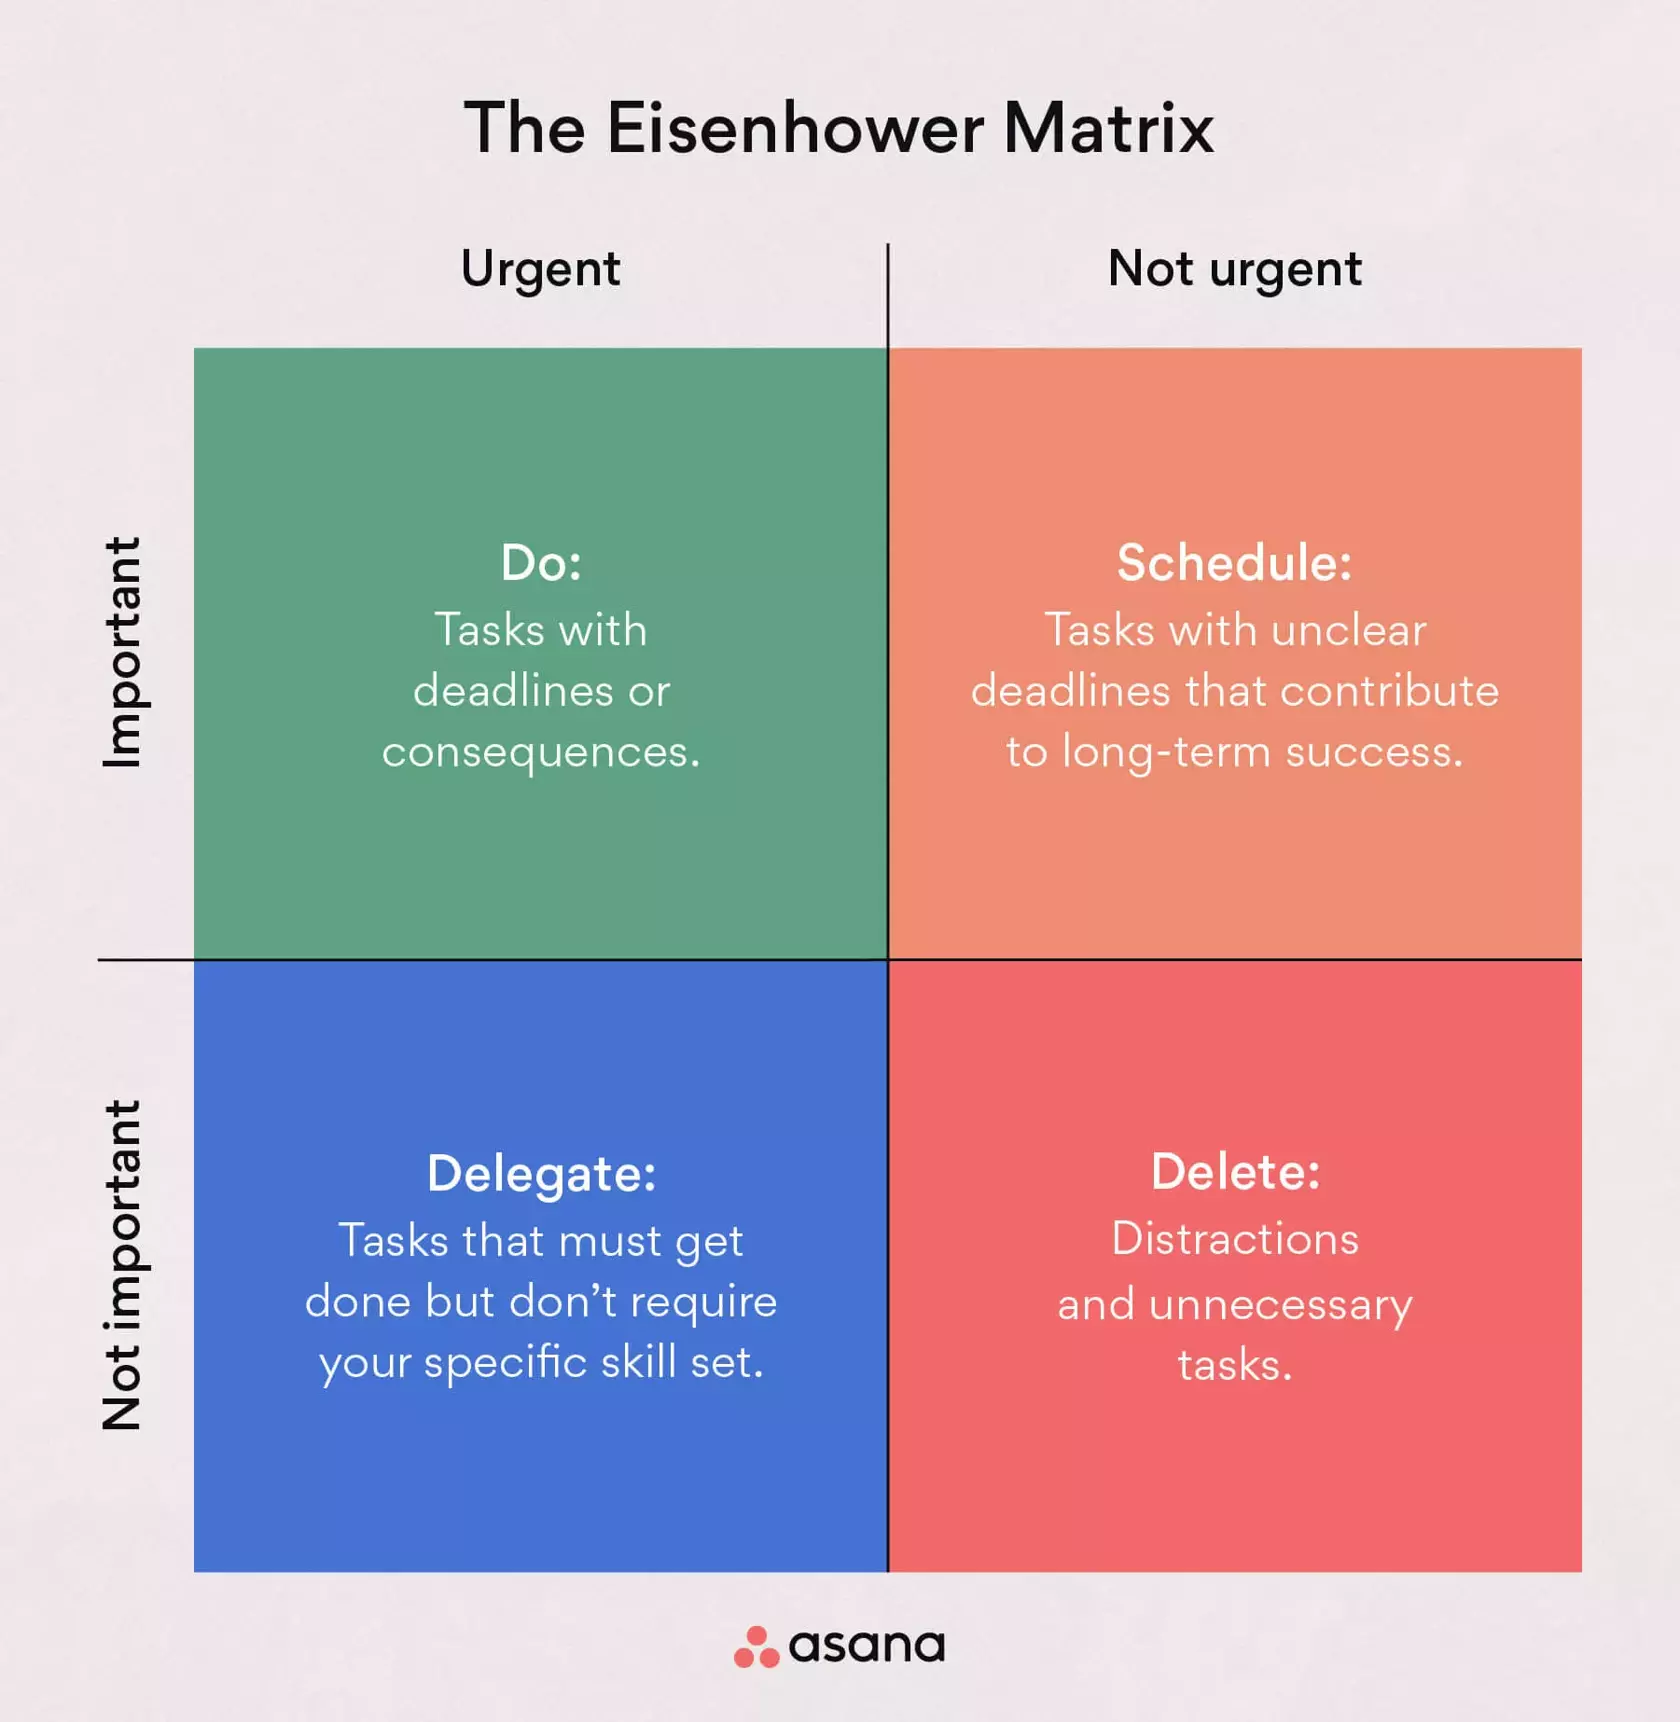 An eisenhower matrix example provided by Asana